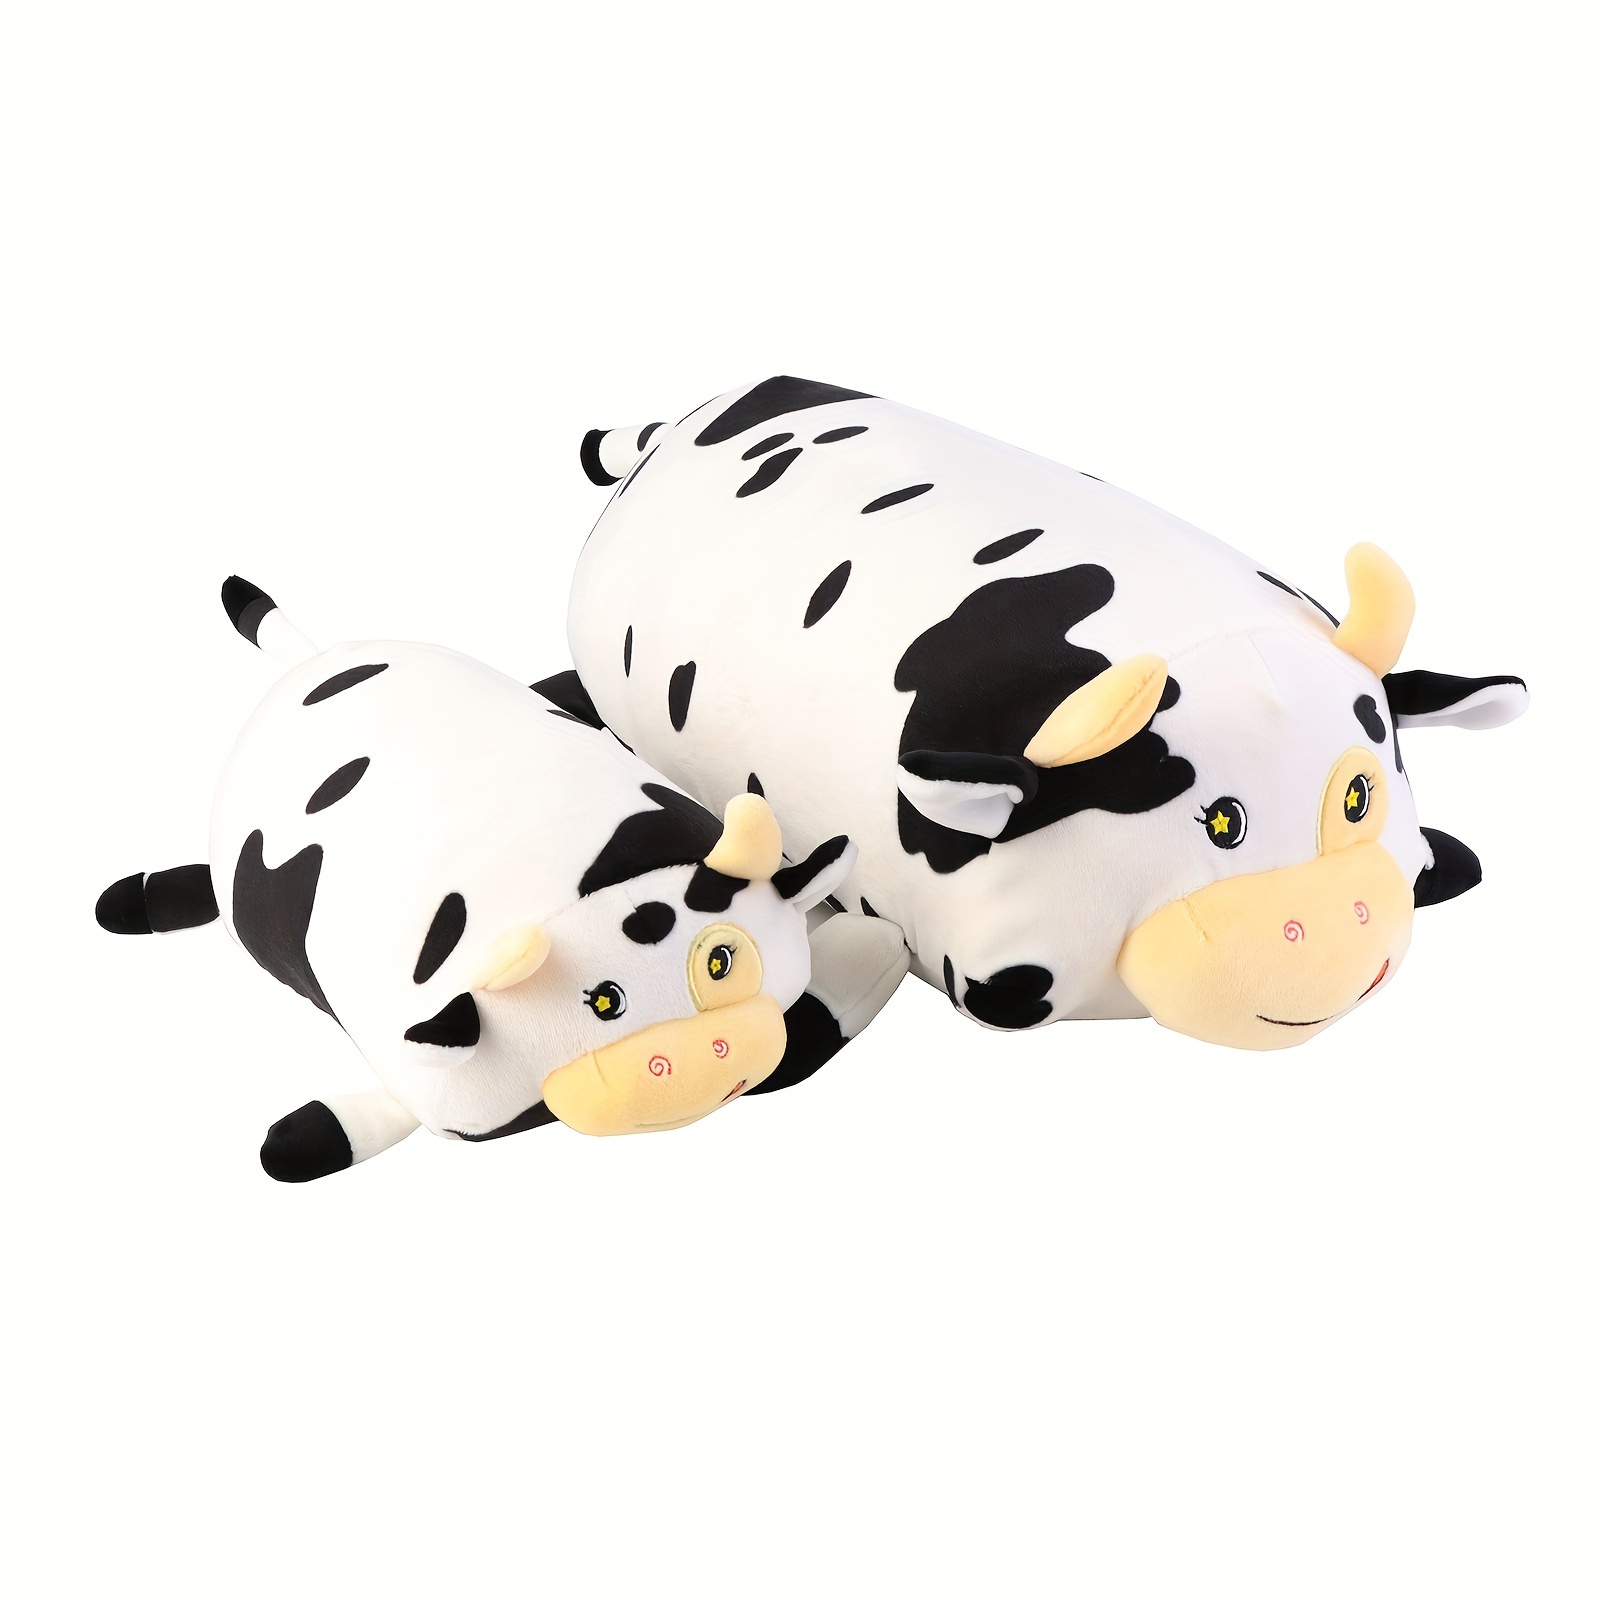 Highland Cow Pillow Pet